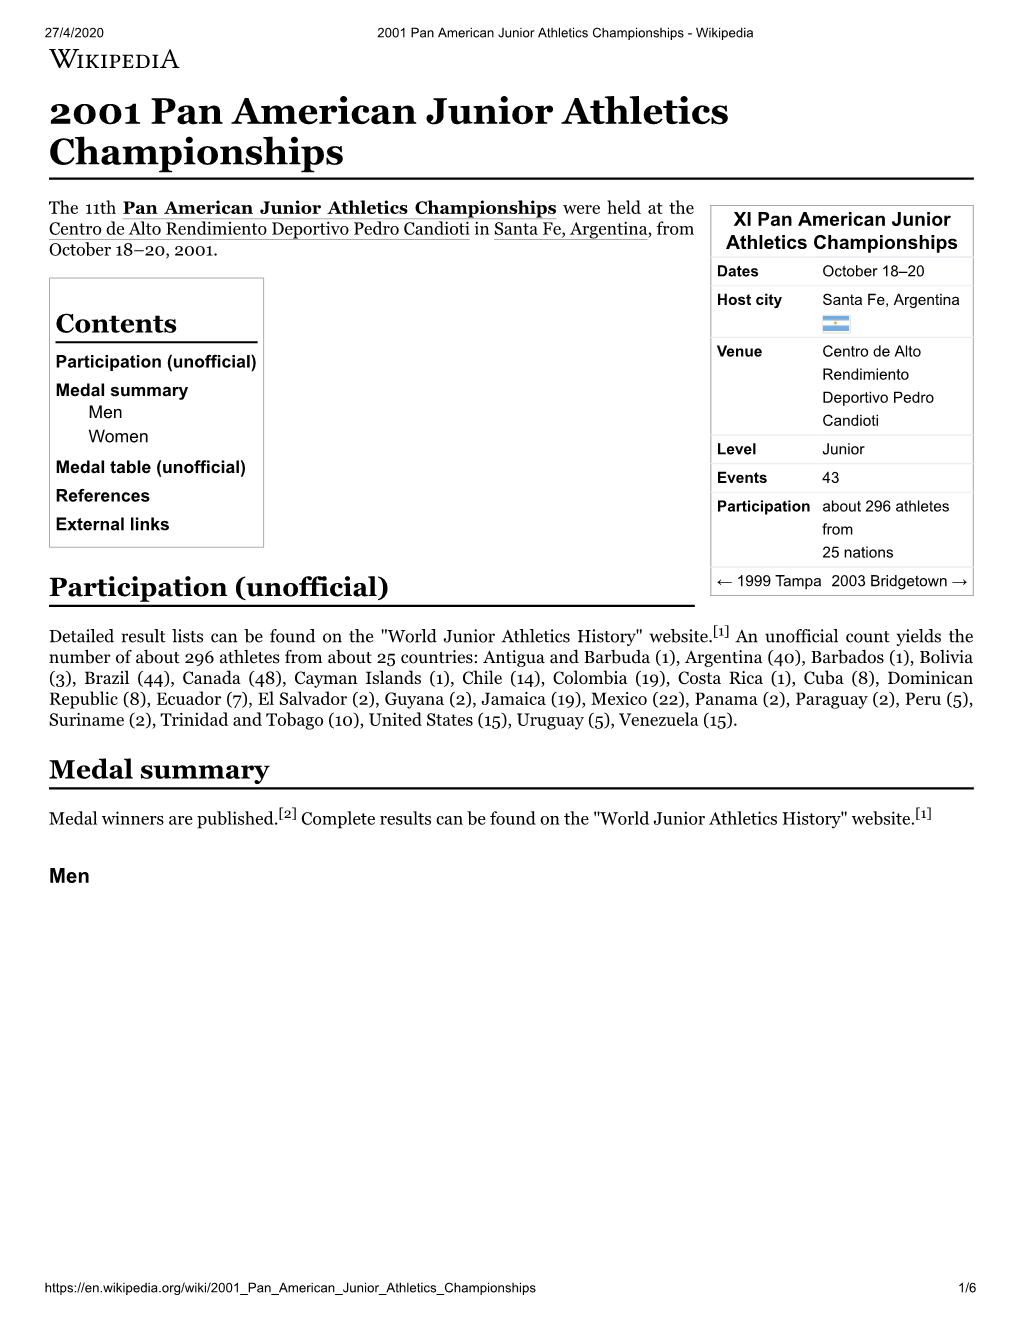 2001 Pan American Junior Athletics Championships - Wikipedia